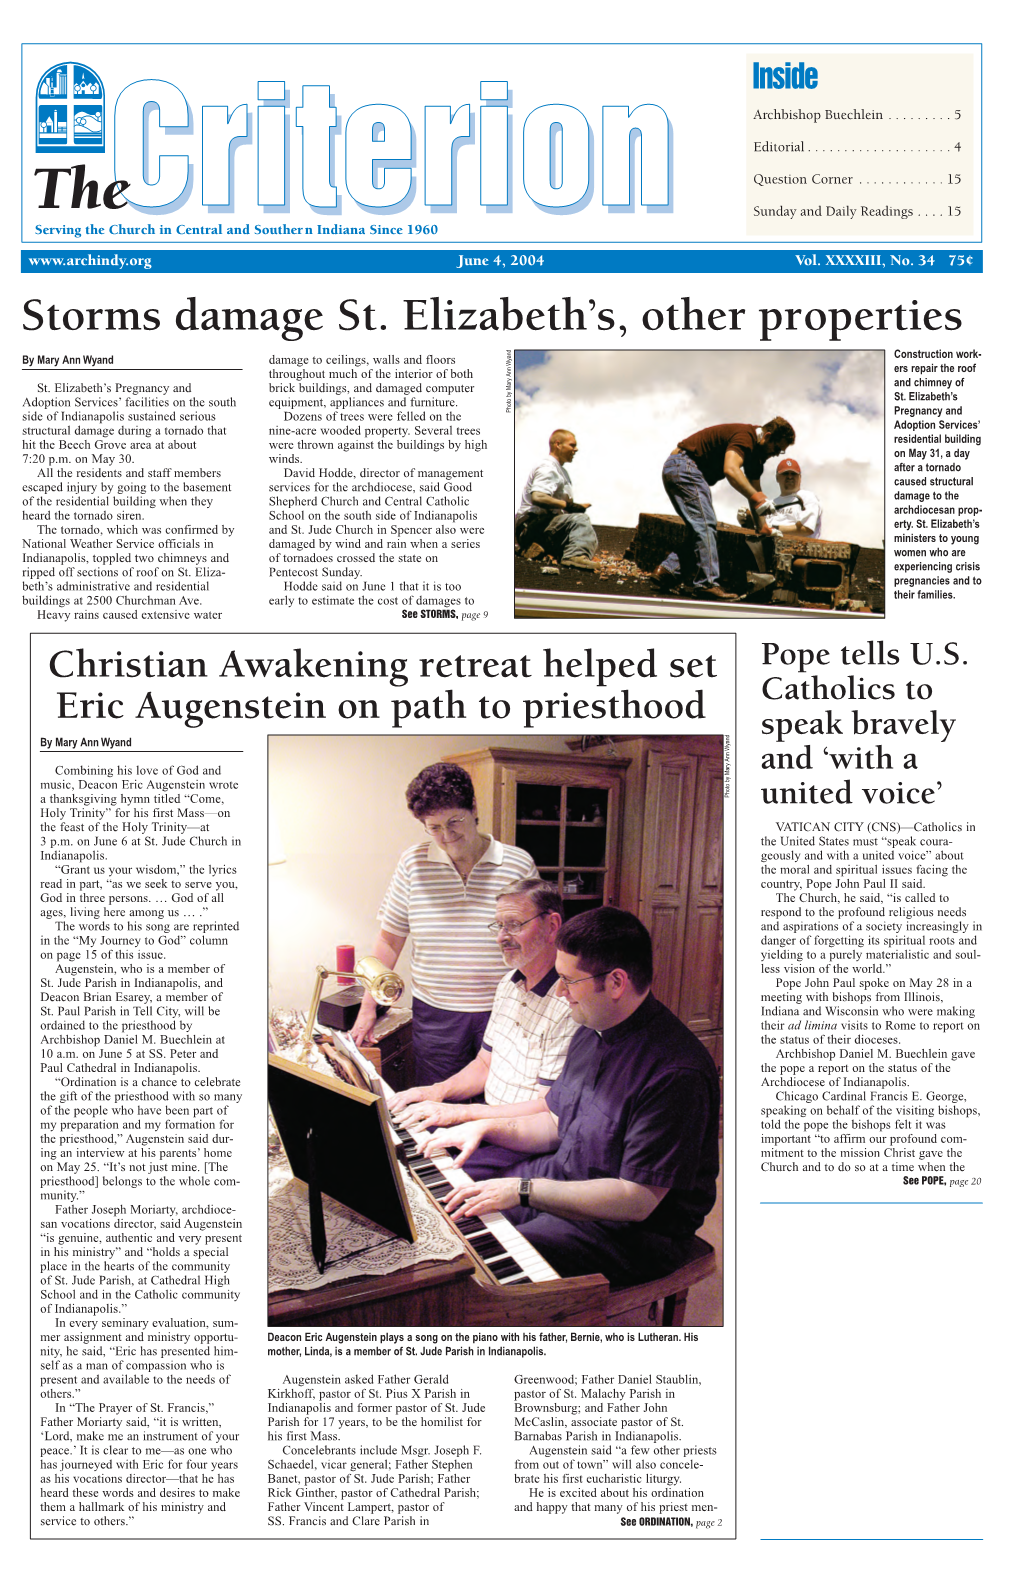 Storms Damage St. Elizabeth's, Other Properties